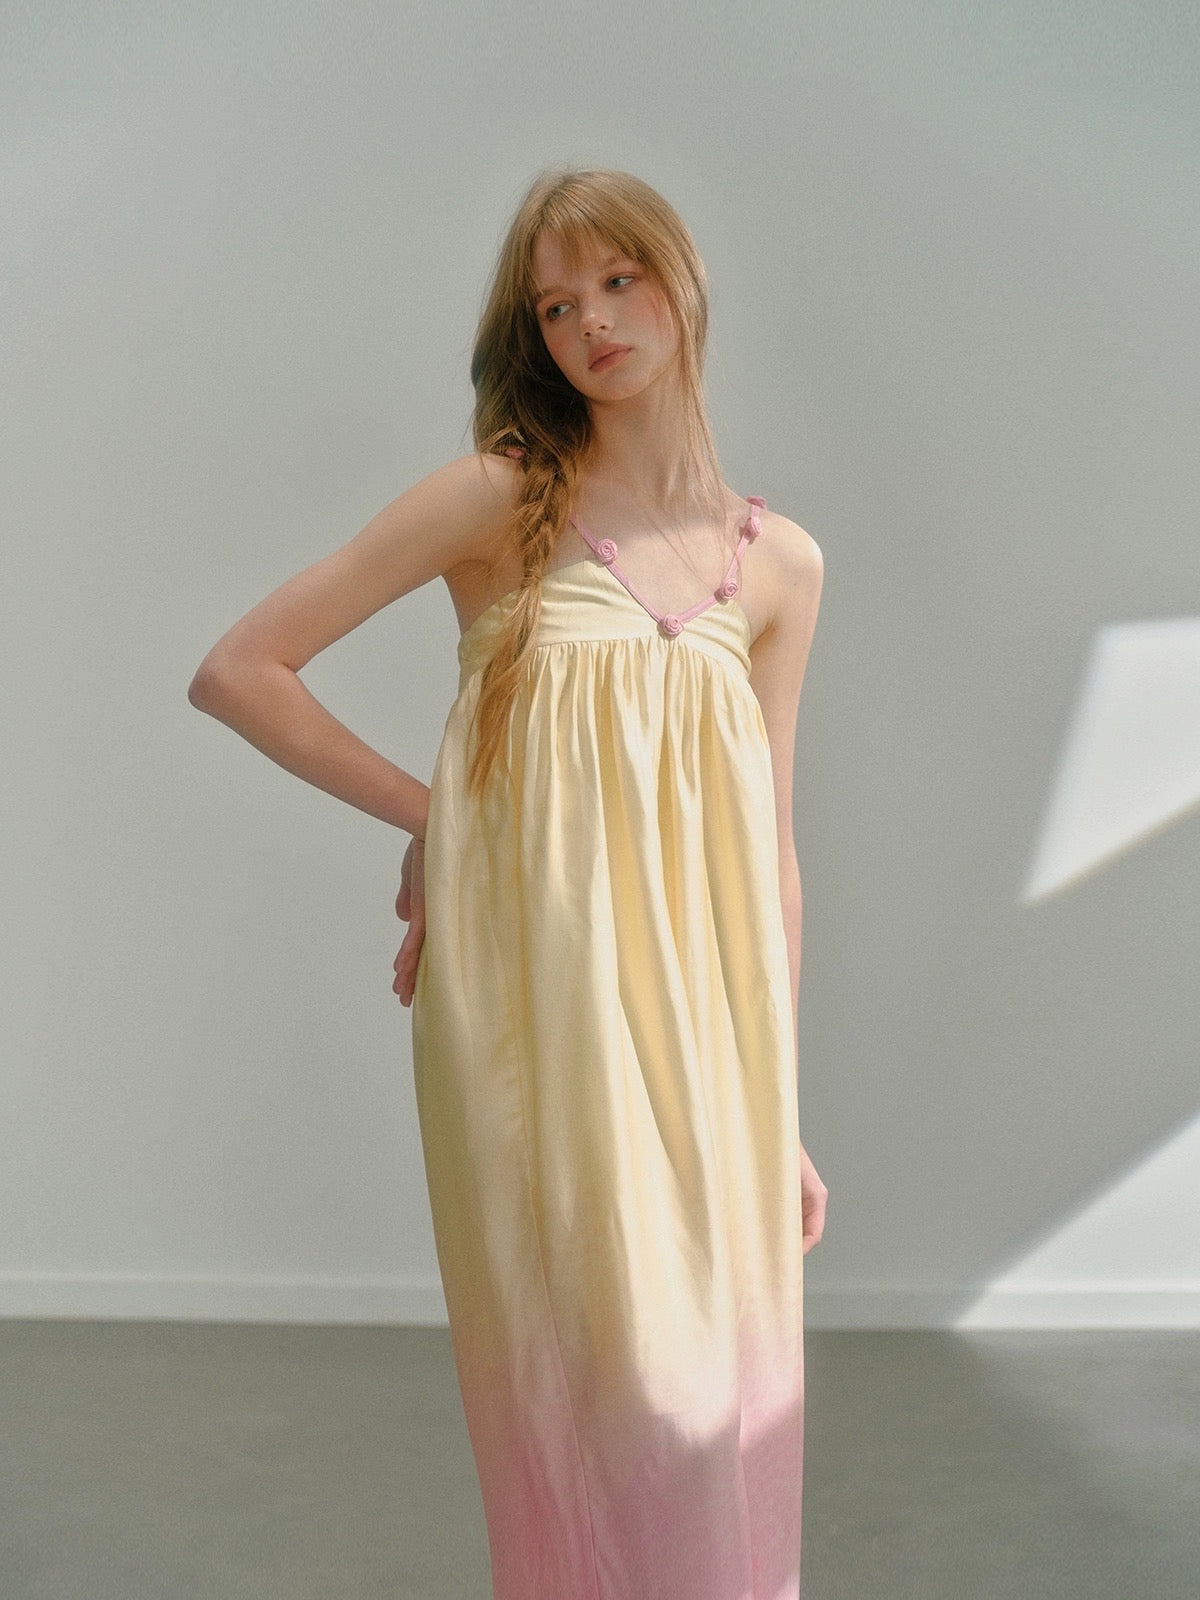 UNOSA.Original Design "Sunset Tulip" Gradient Holiday Long Dress